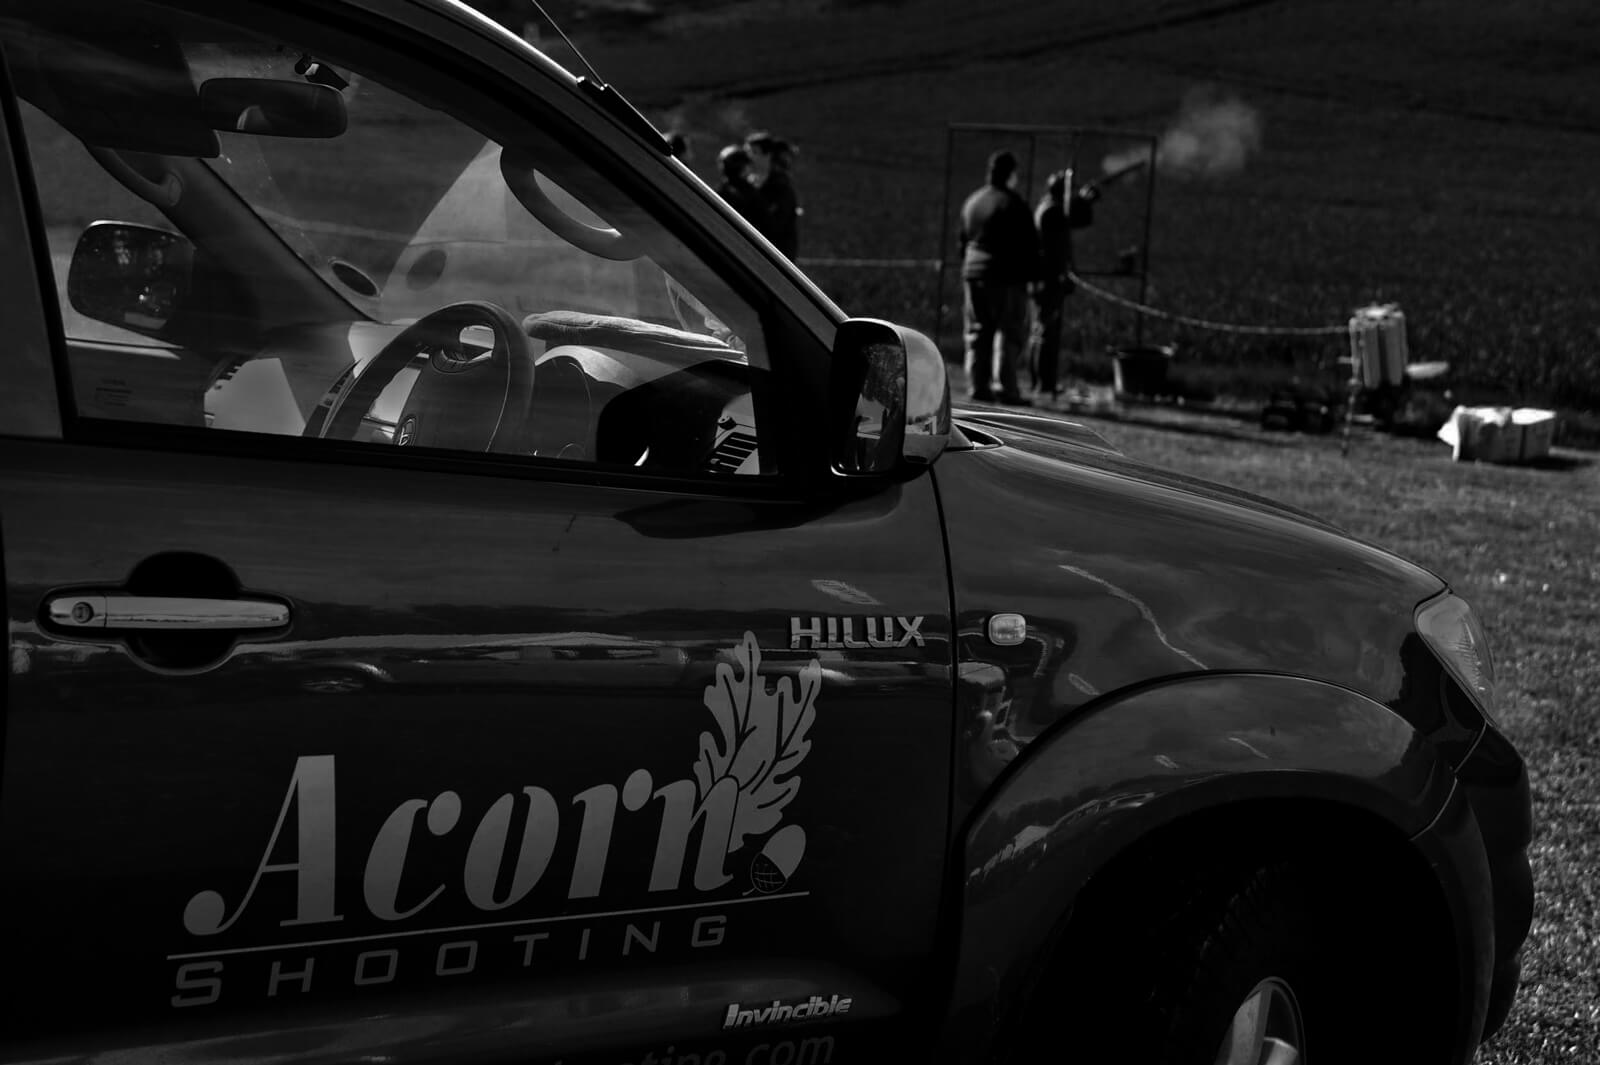 acorn shooting